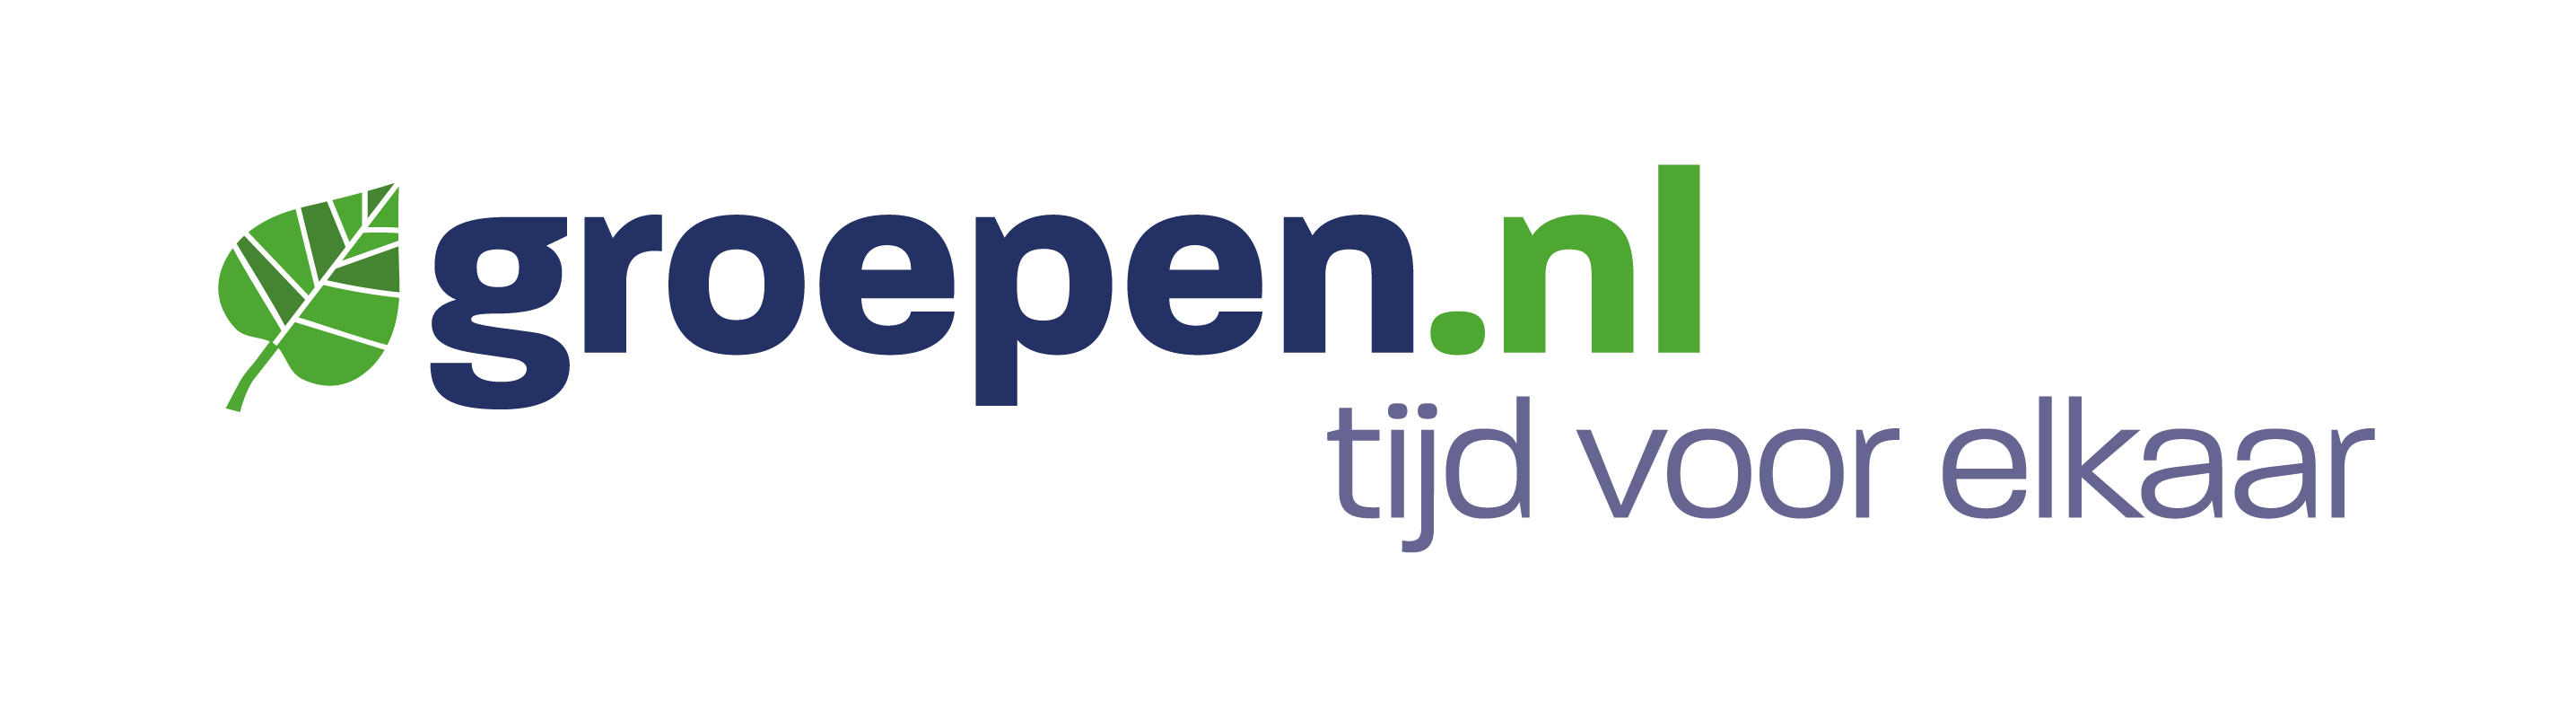 GROEPEN.NL logo